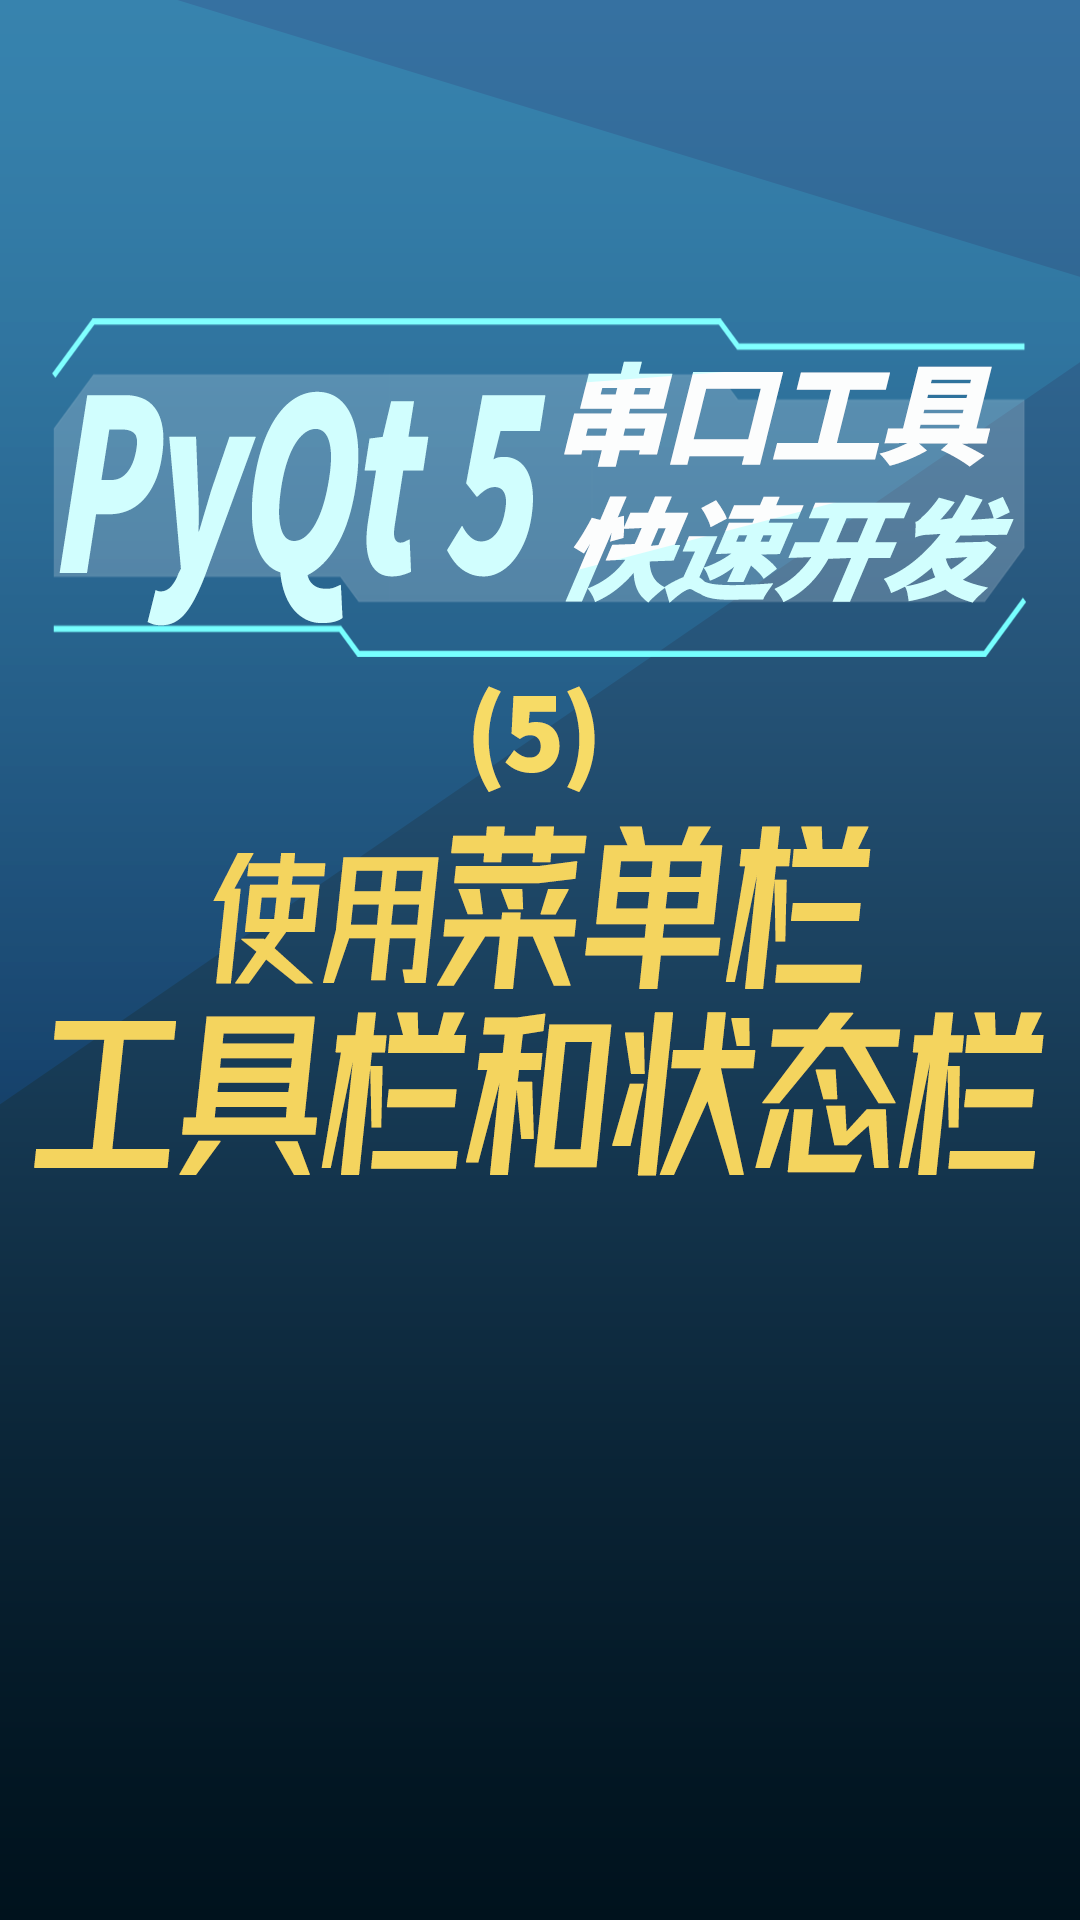 pyqt5串口工具快速开发5-使用菜单栏、工具栏和状态栏#串口工具开发 